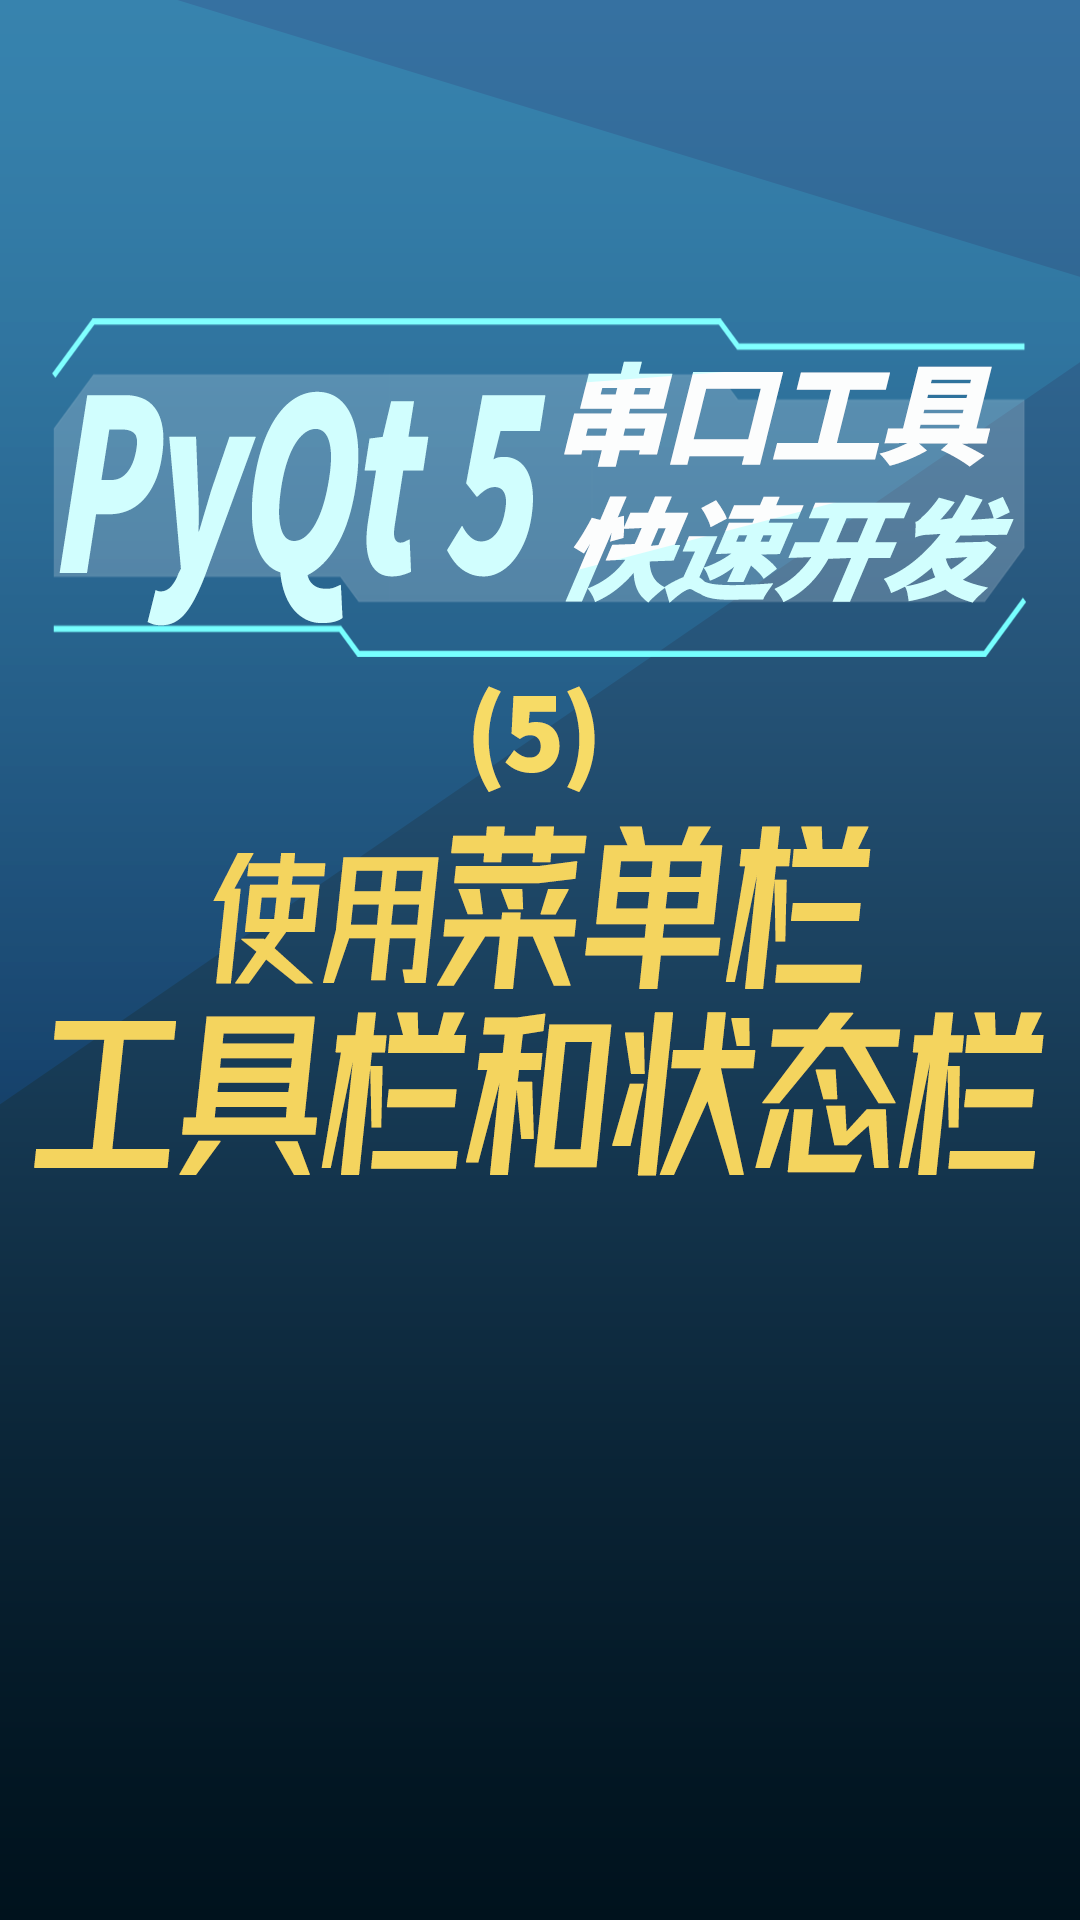 pyqt5串口工具快速开发5-使用菜单栏、工具栏和状态栏#串口工具开发 